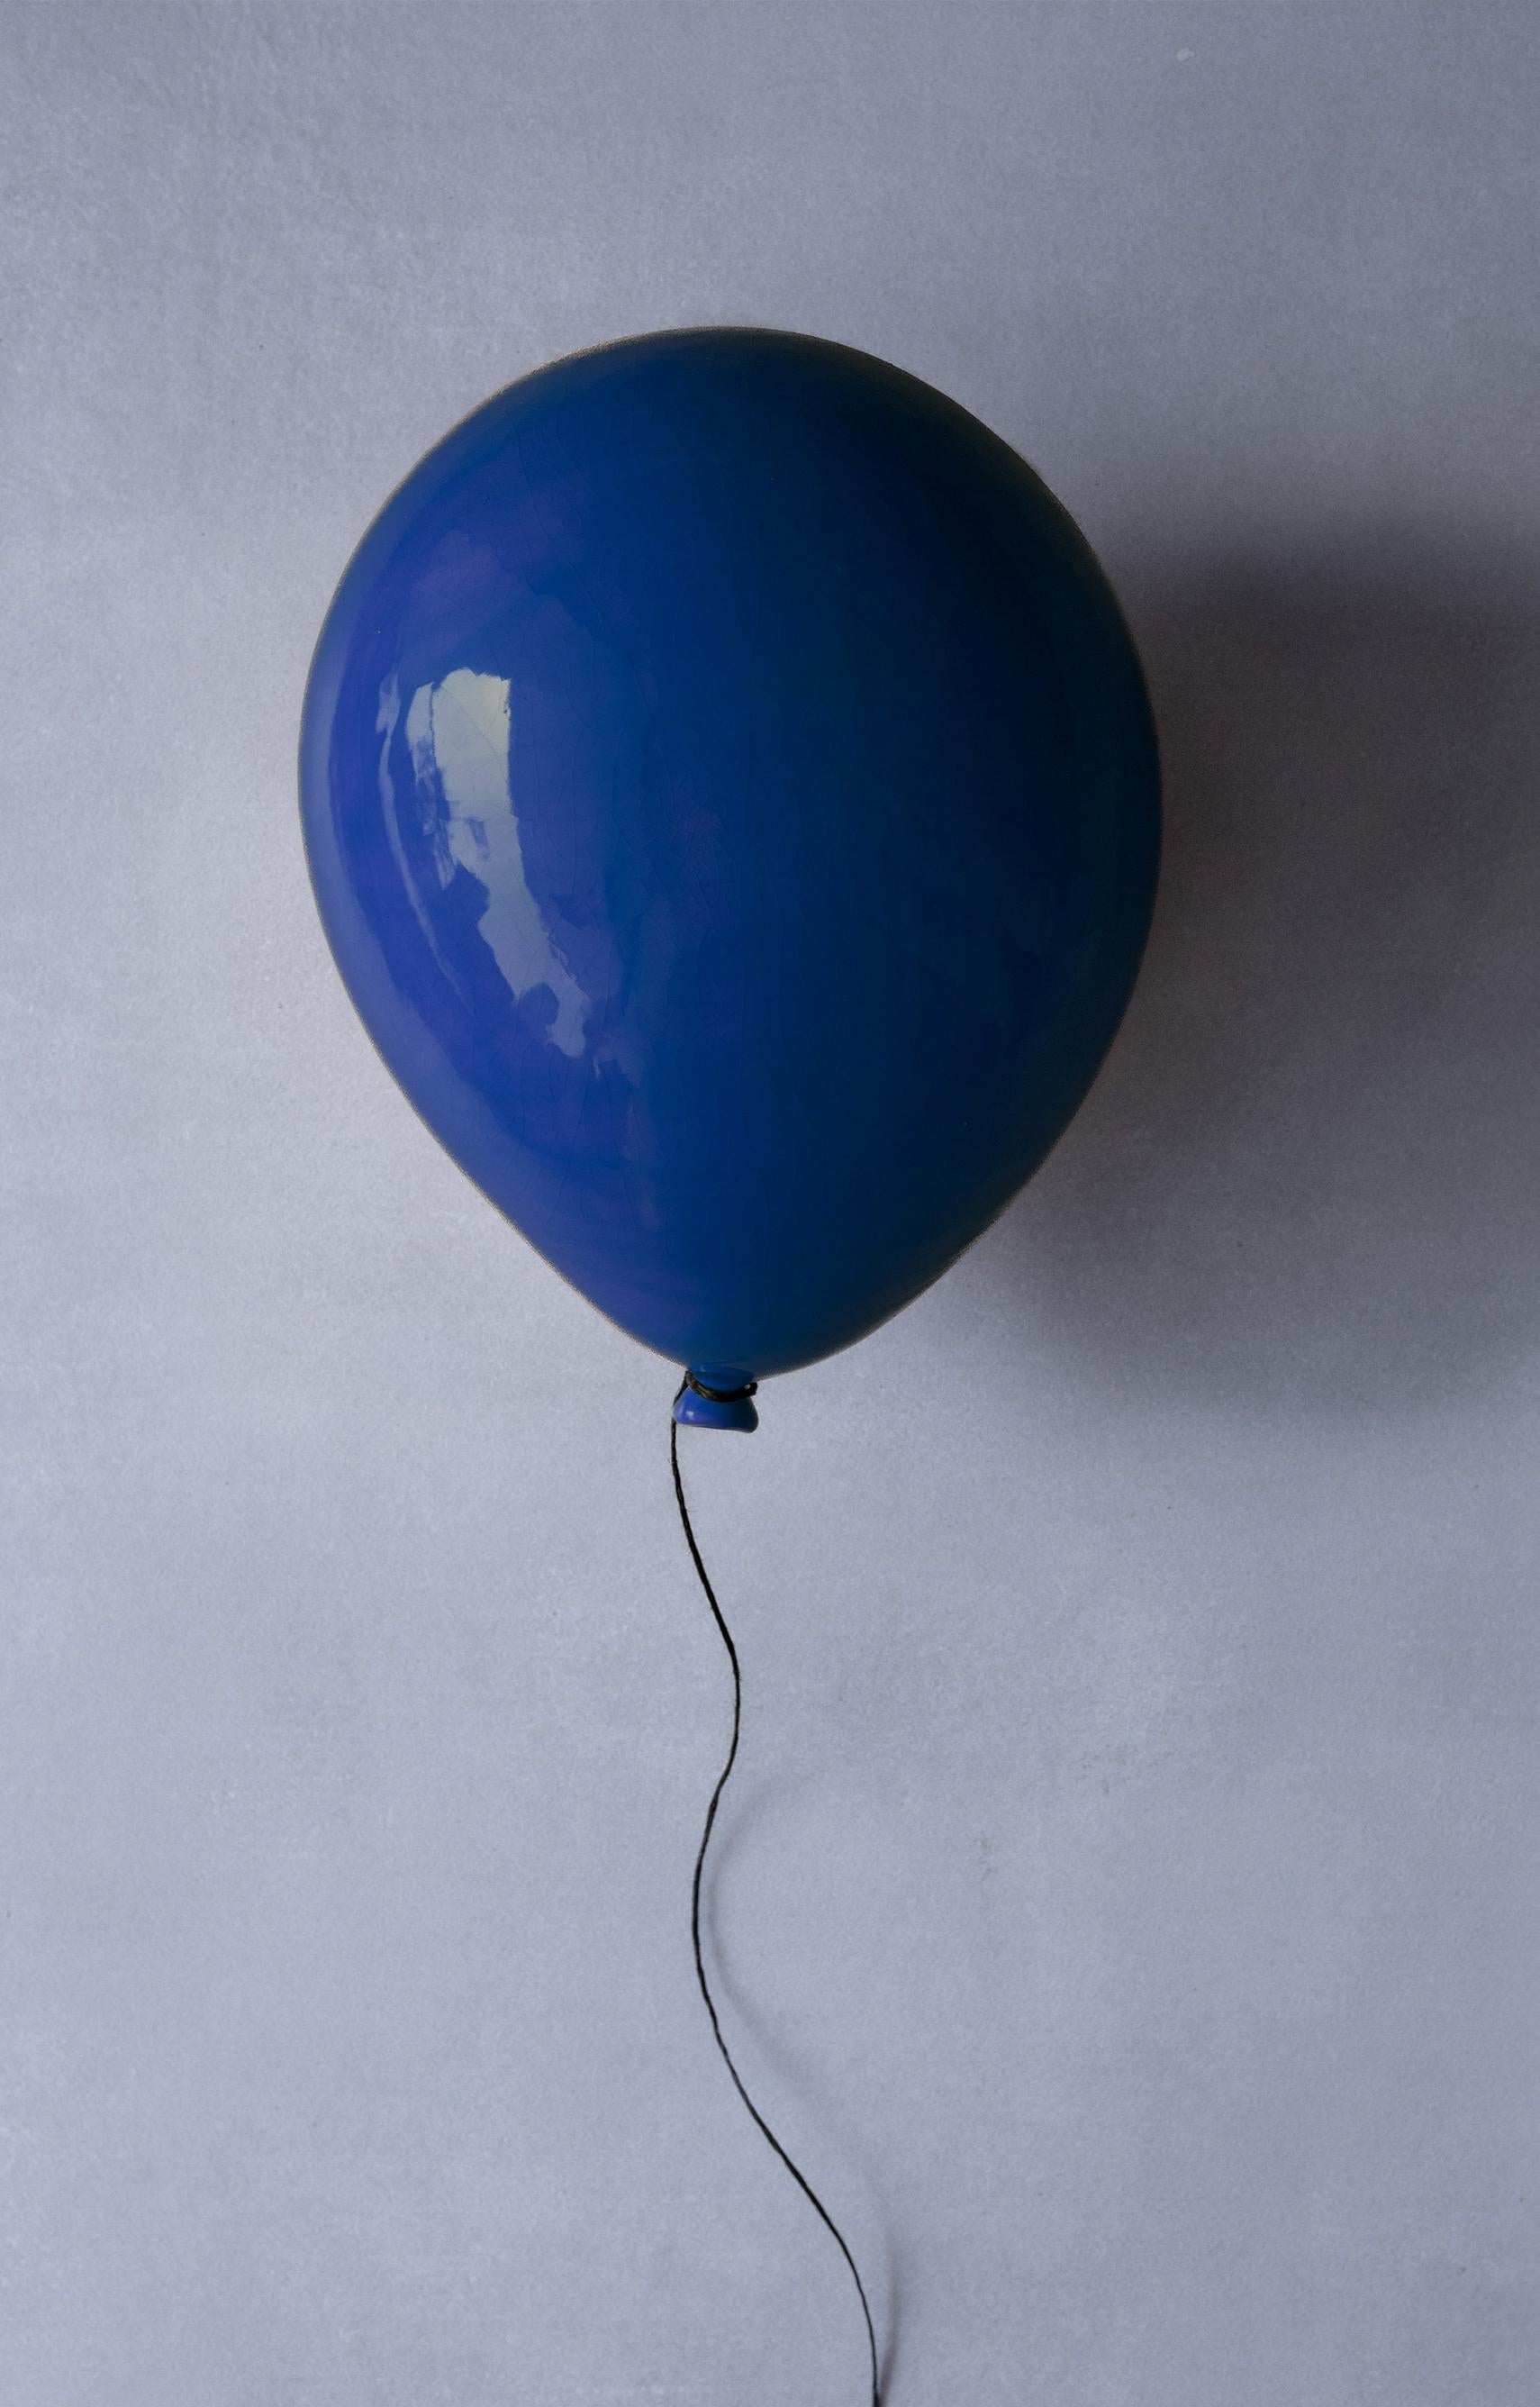 Cara-bien Blue glossy ceramic balloon sculpture handmade for wall, ceiling